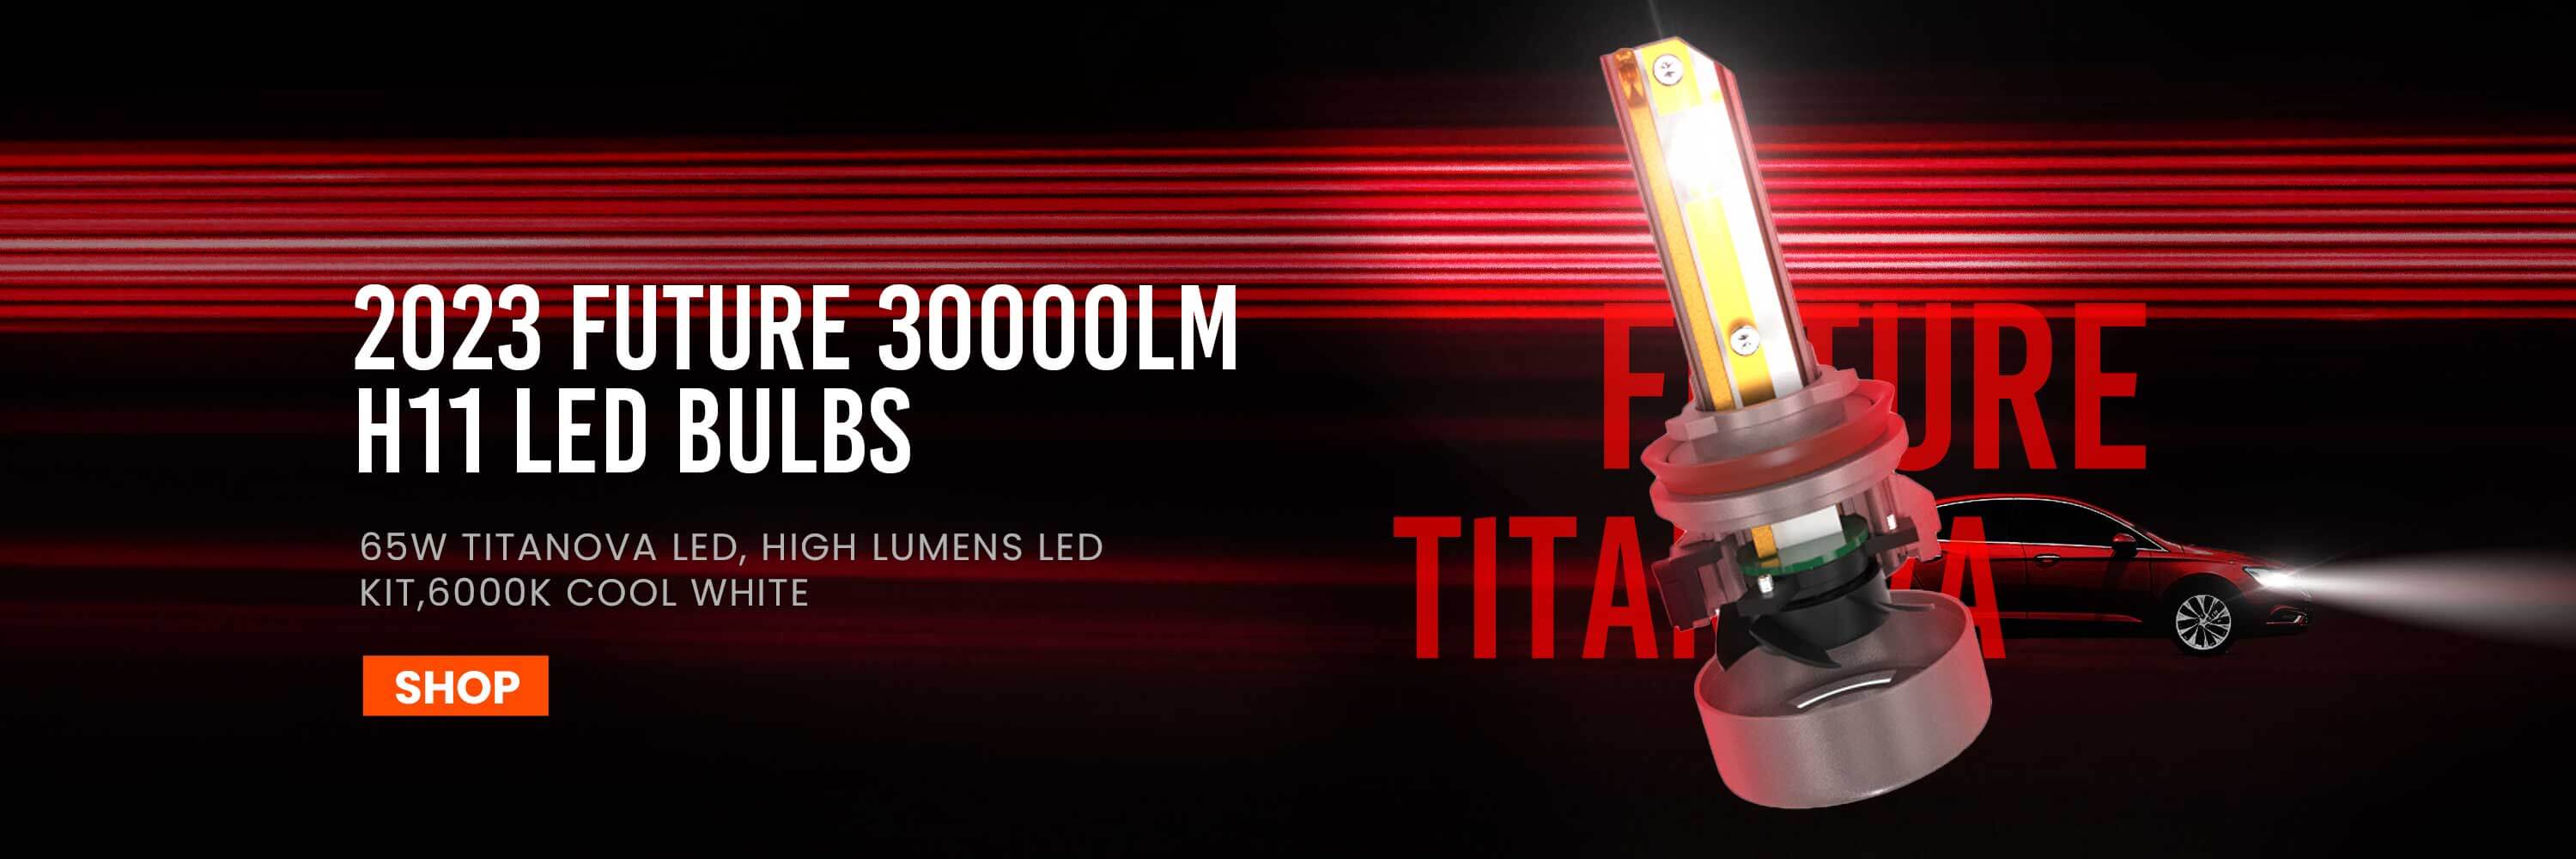 HIKARI UltraFocus 9004 HB1 LED Bulbs,18000LM,Dual Beam,32W Prime ZES LED Eq  通販